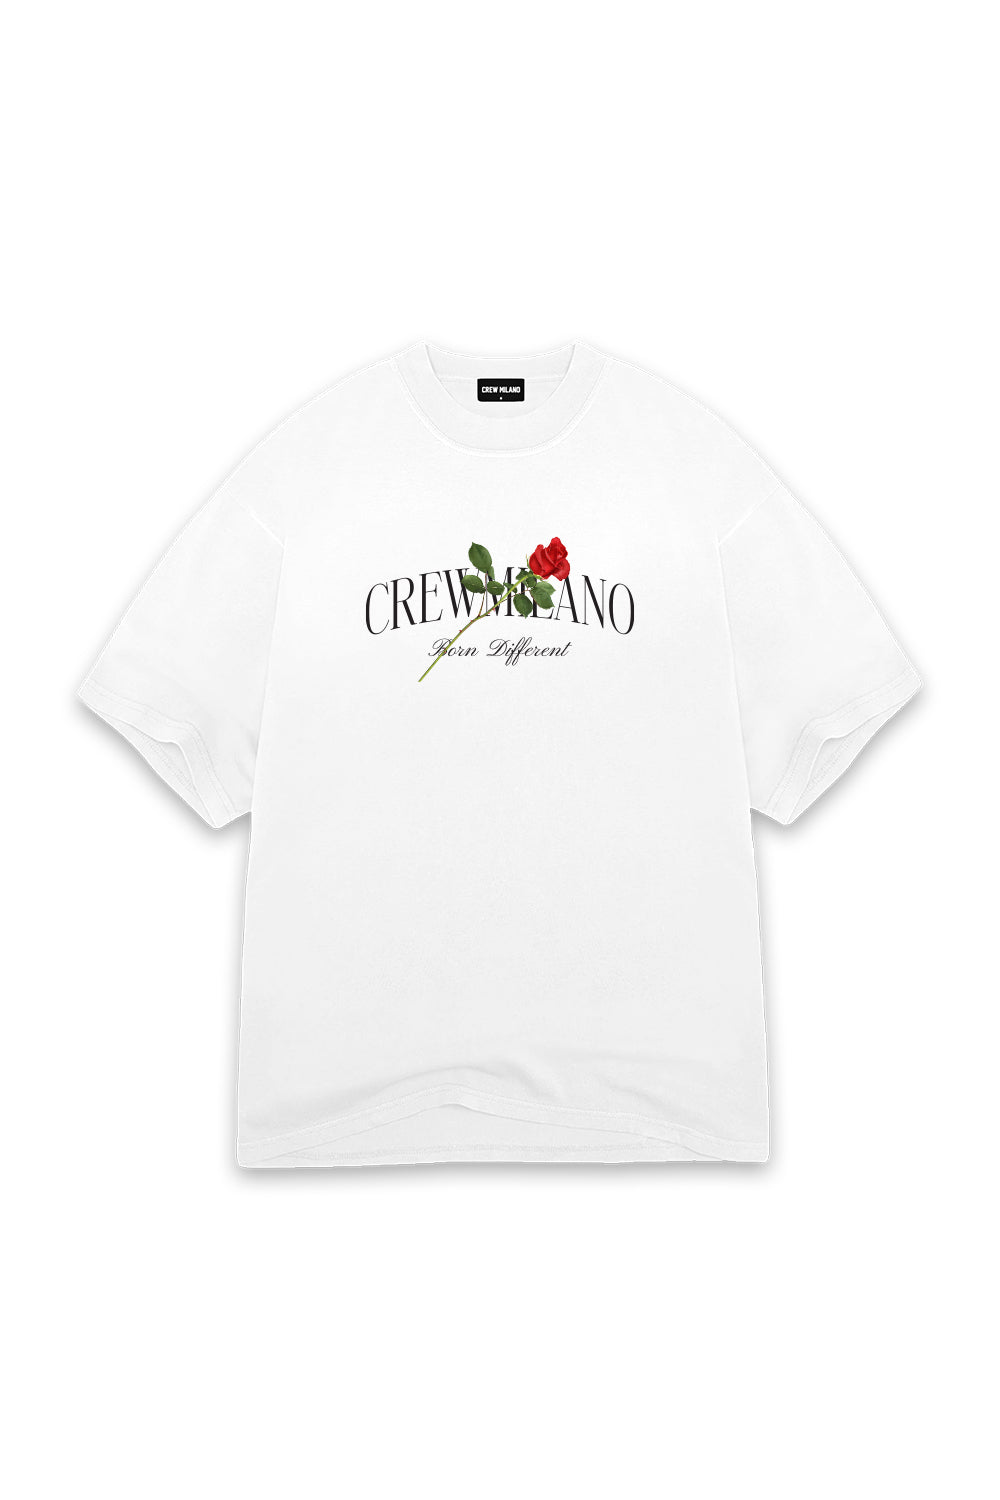 CREW Milano Rose Print Oversized T-Shirt